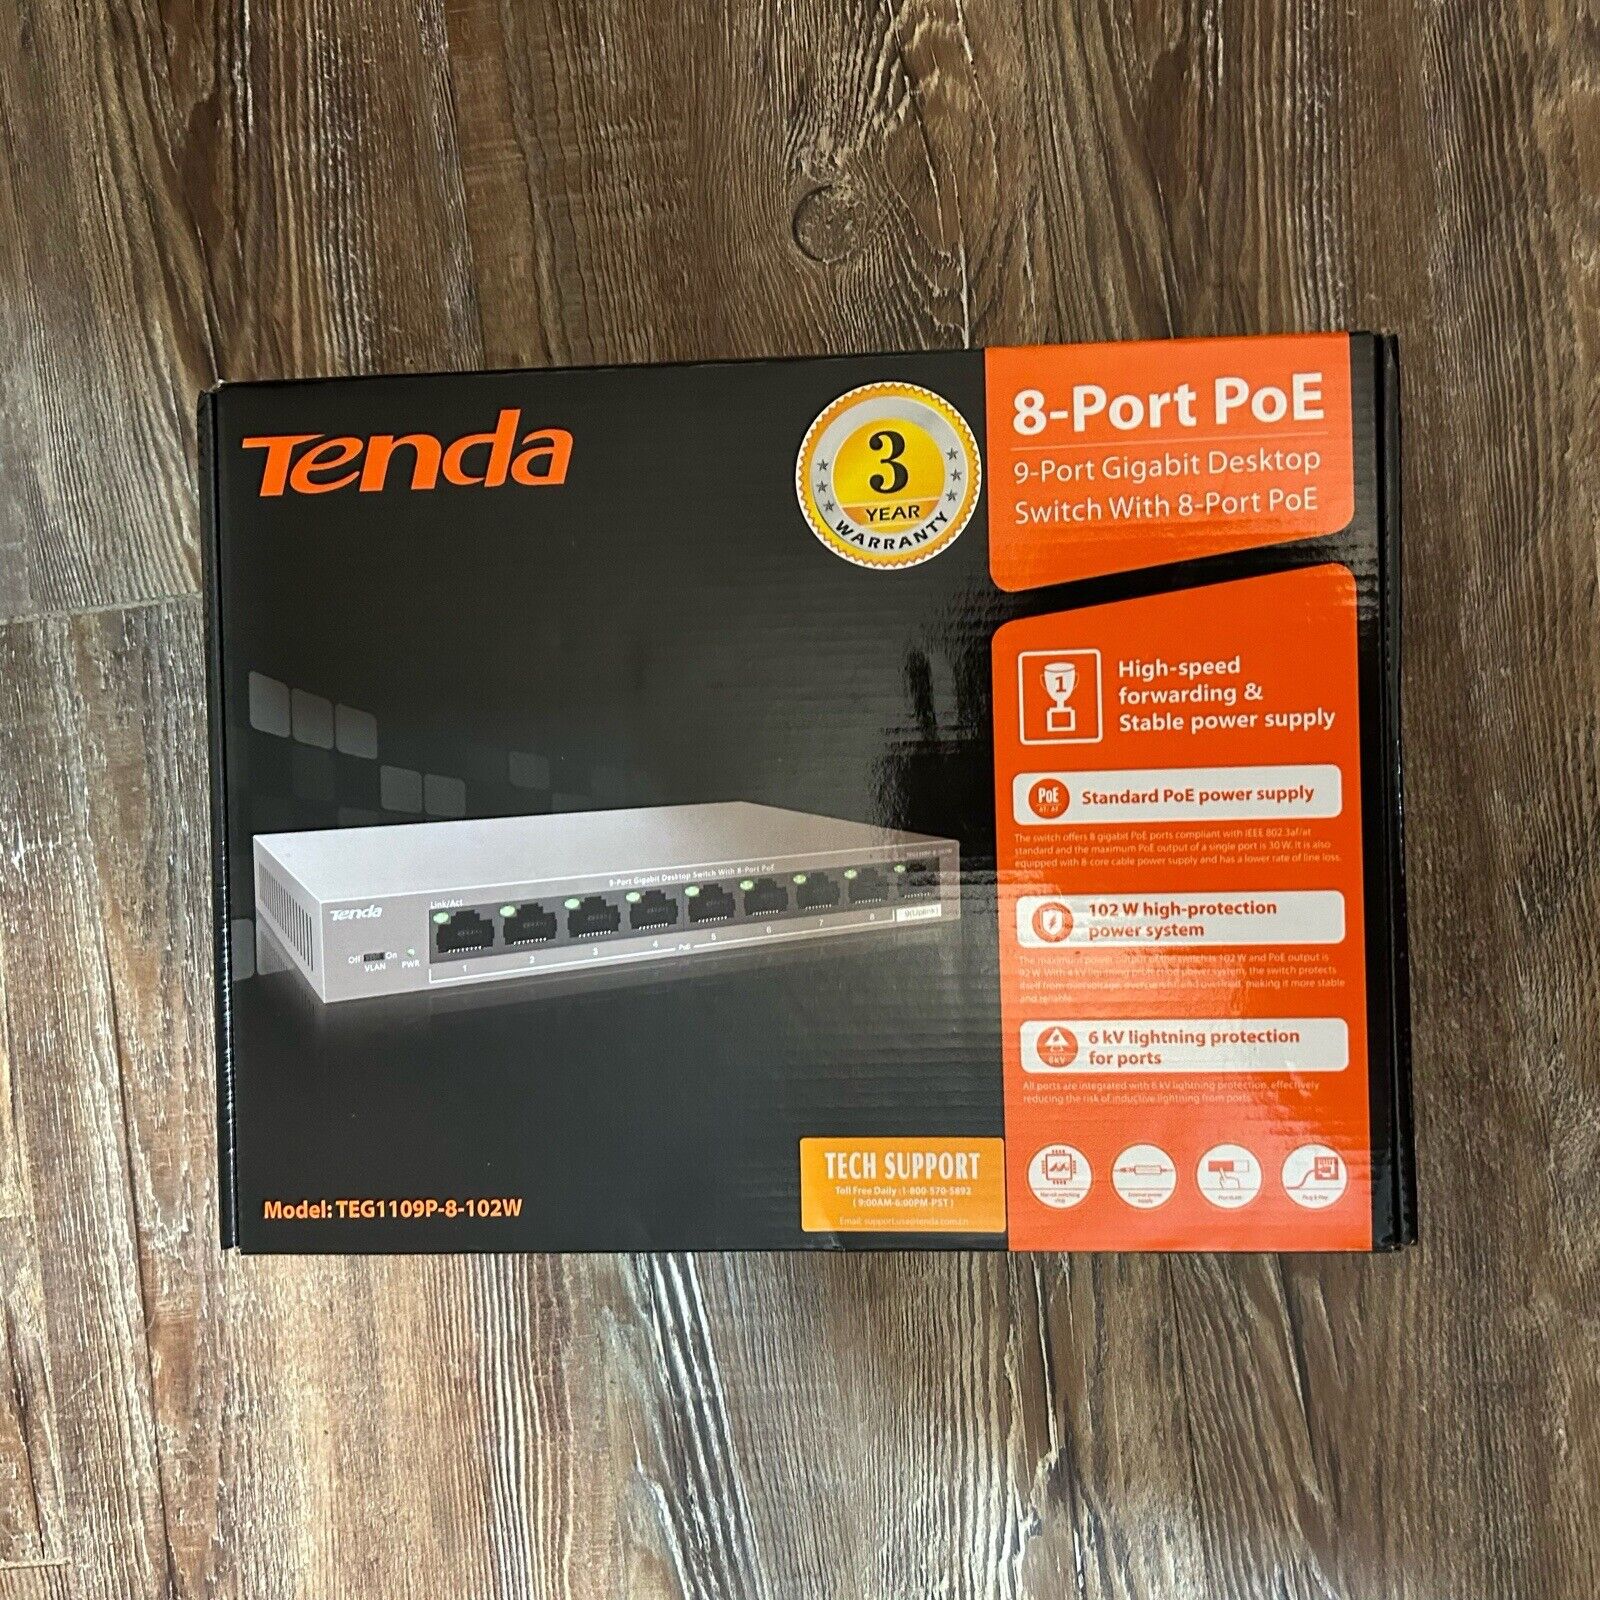 Tenda TEG1109P-8-102W 9-Port Gigabit Desktop Ethernet Switch Hub with 8-Port NEW